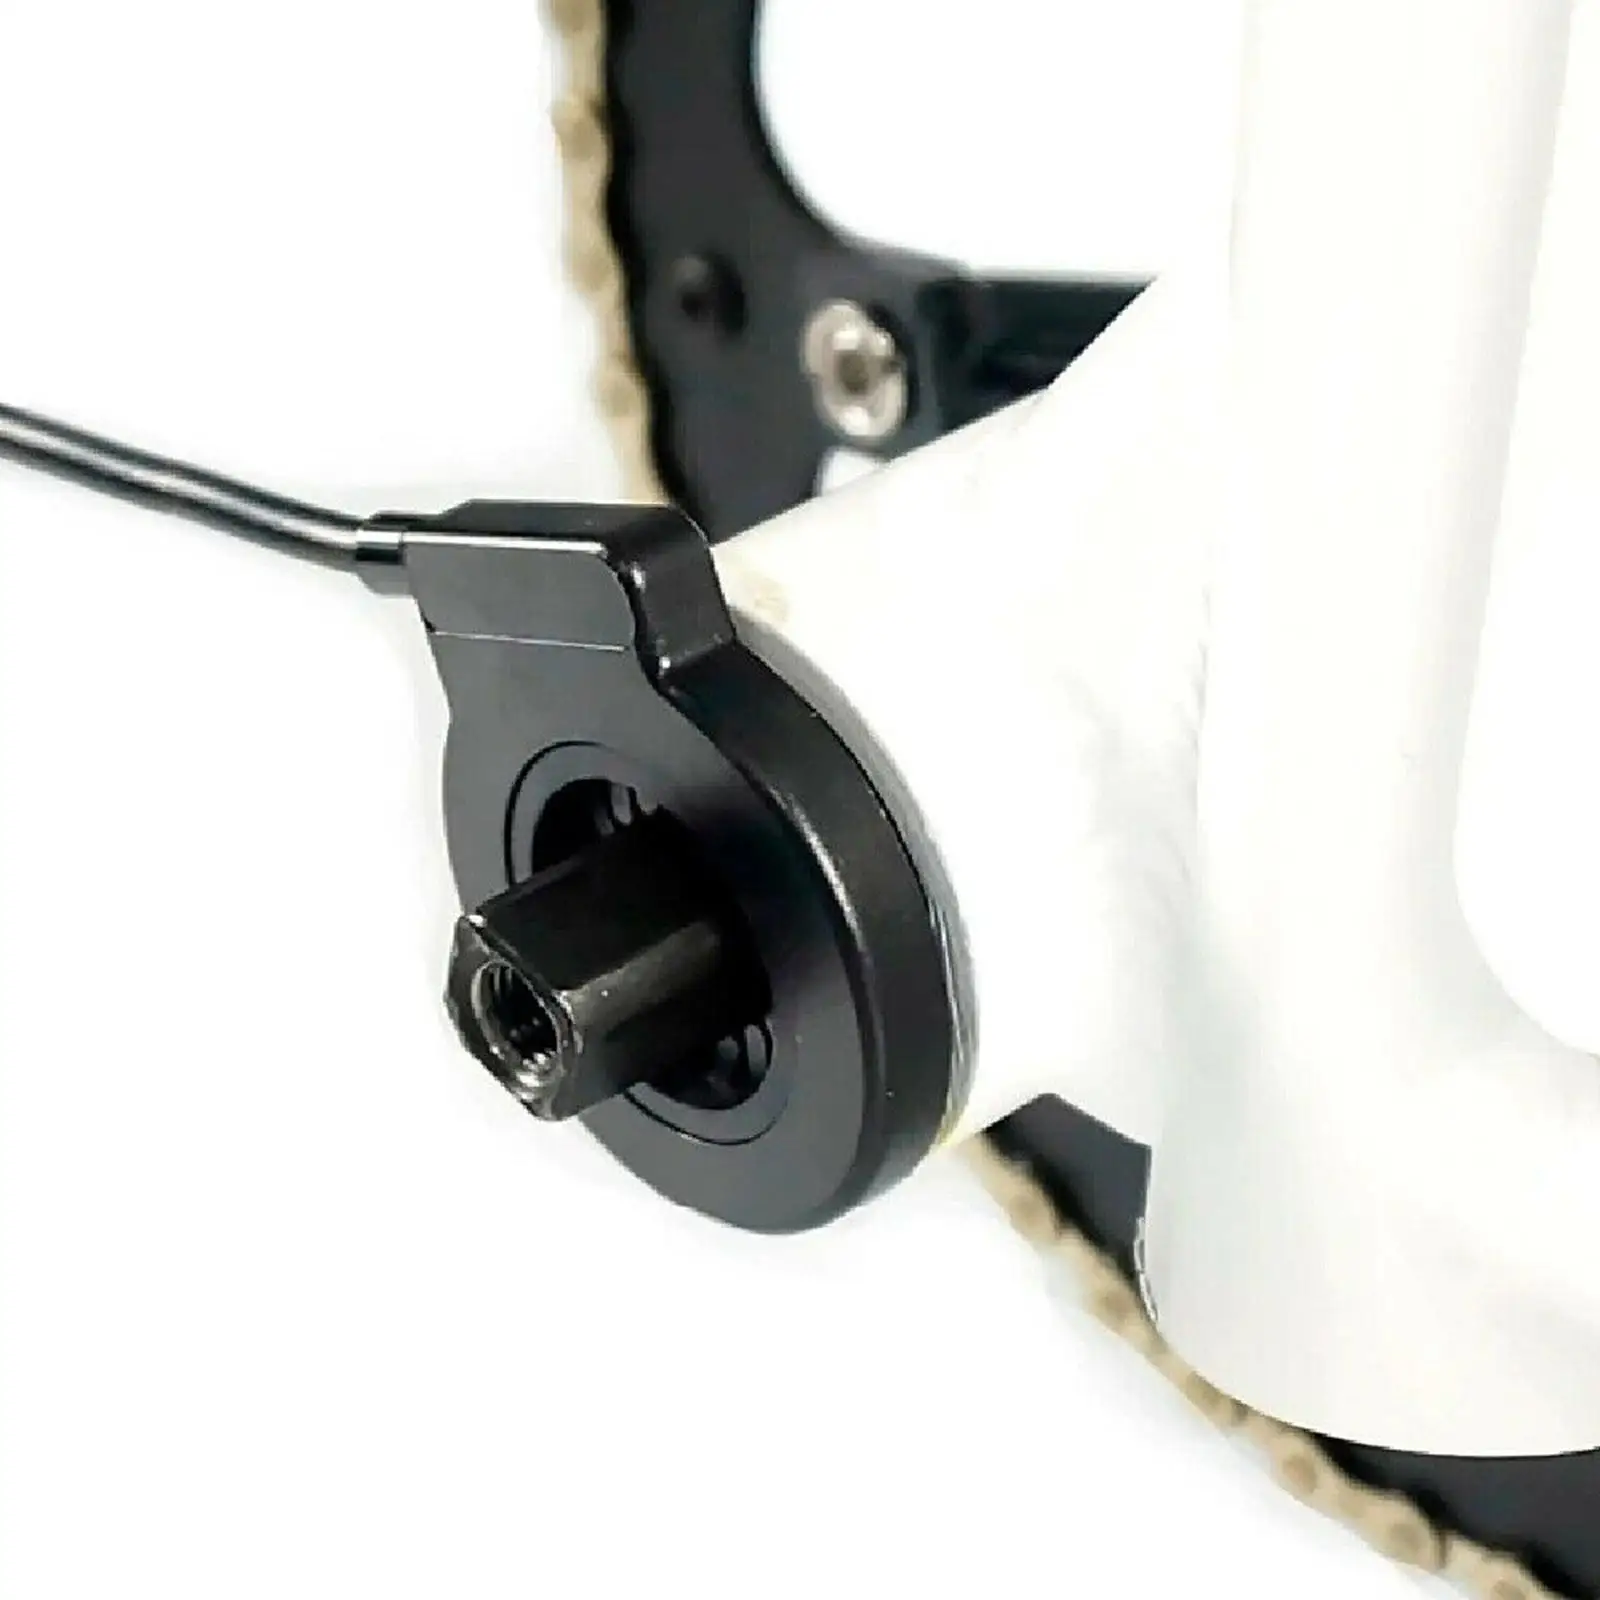 Pedal -Bike K Magnetic Point Boost Sensor SM/Waterproof Joint